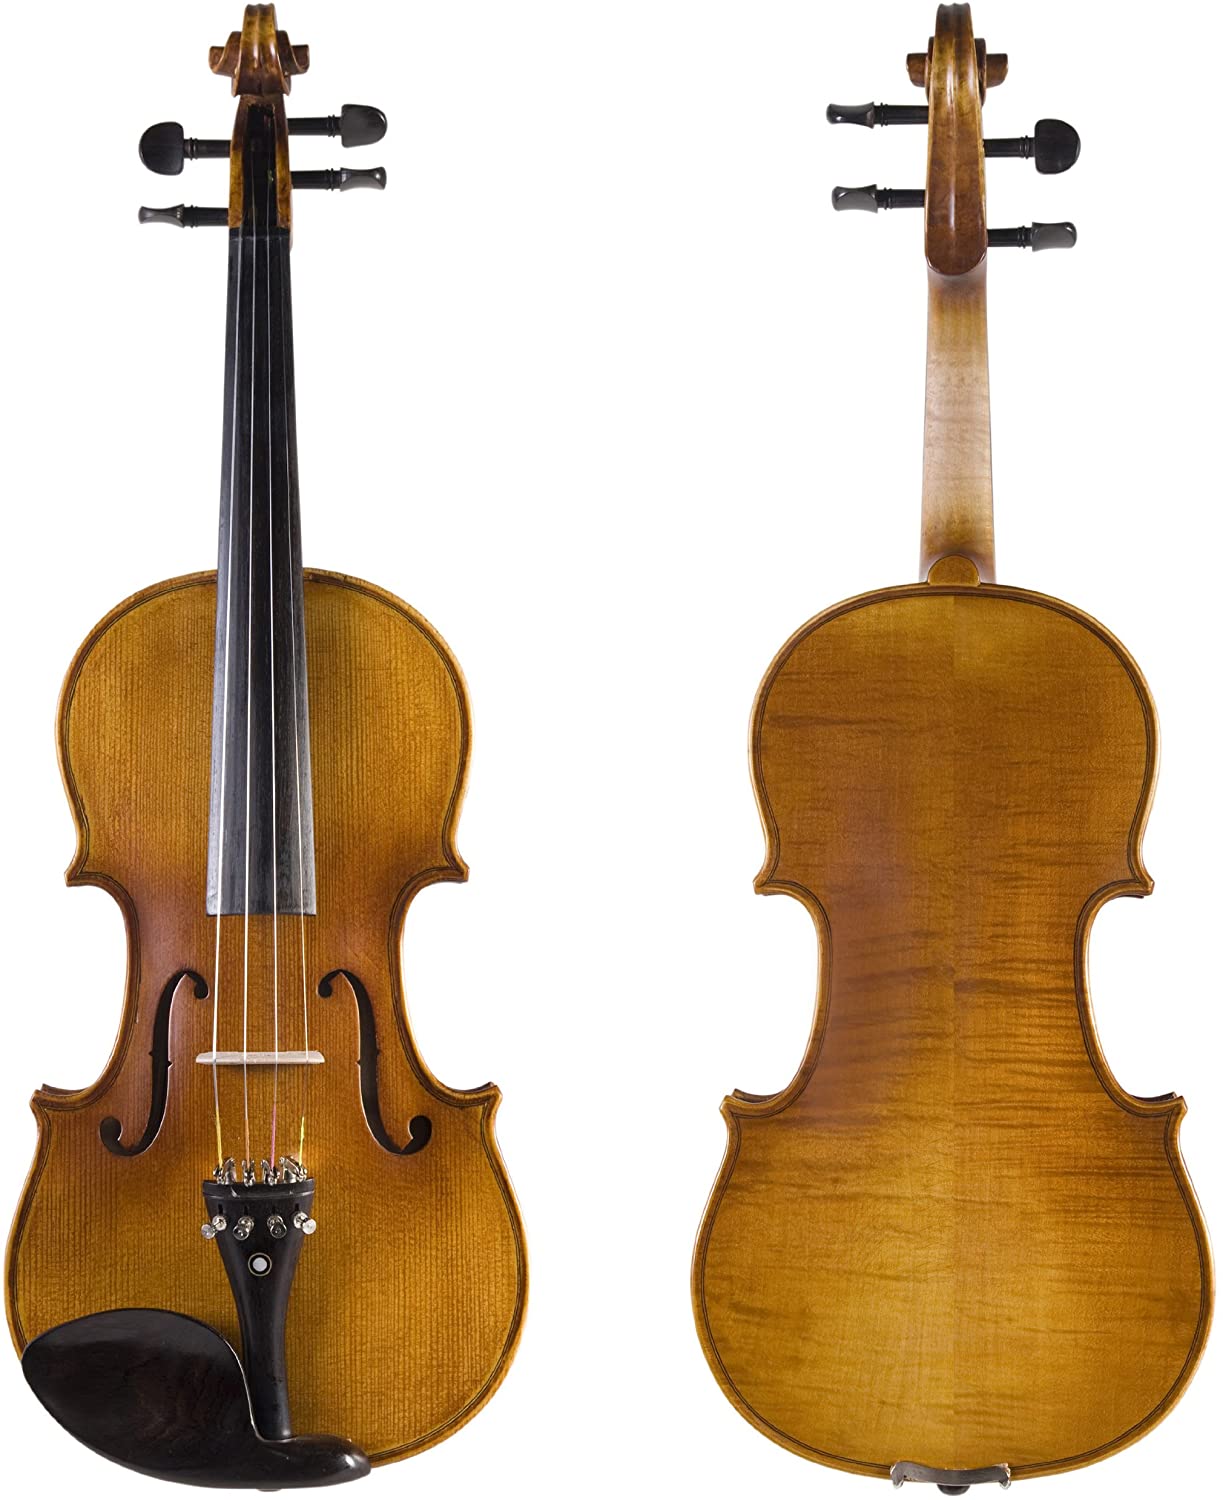 Cecilio CVN-500 Solidwood Ebony Fitted Violin with D'Addario Prelude Strings